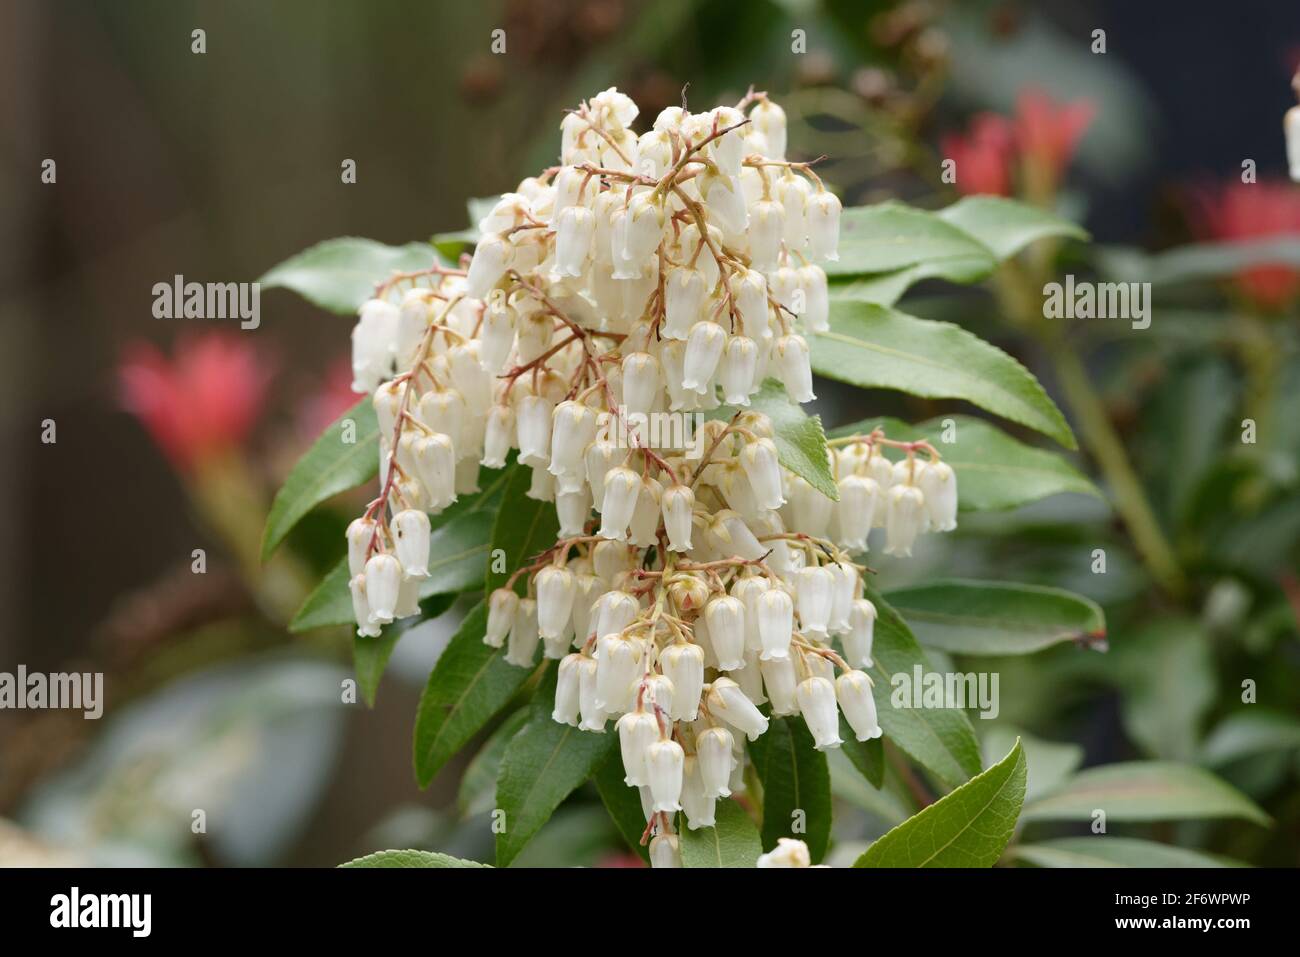 Pieris japonica, fiori a campana di andromeda giapponese o pieris giapponese Foto Stock